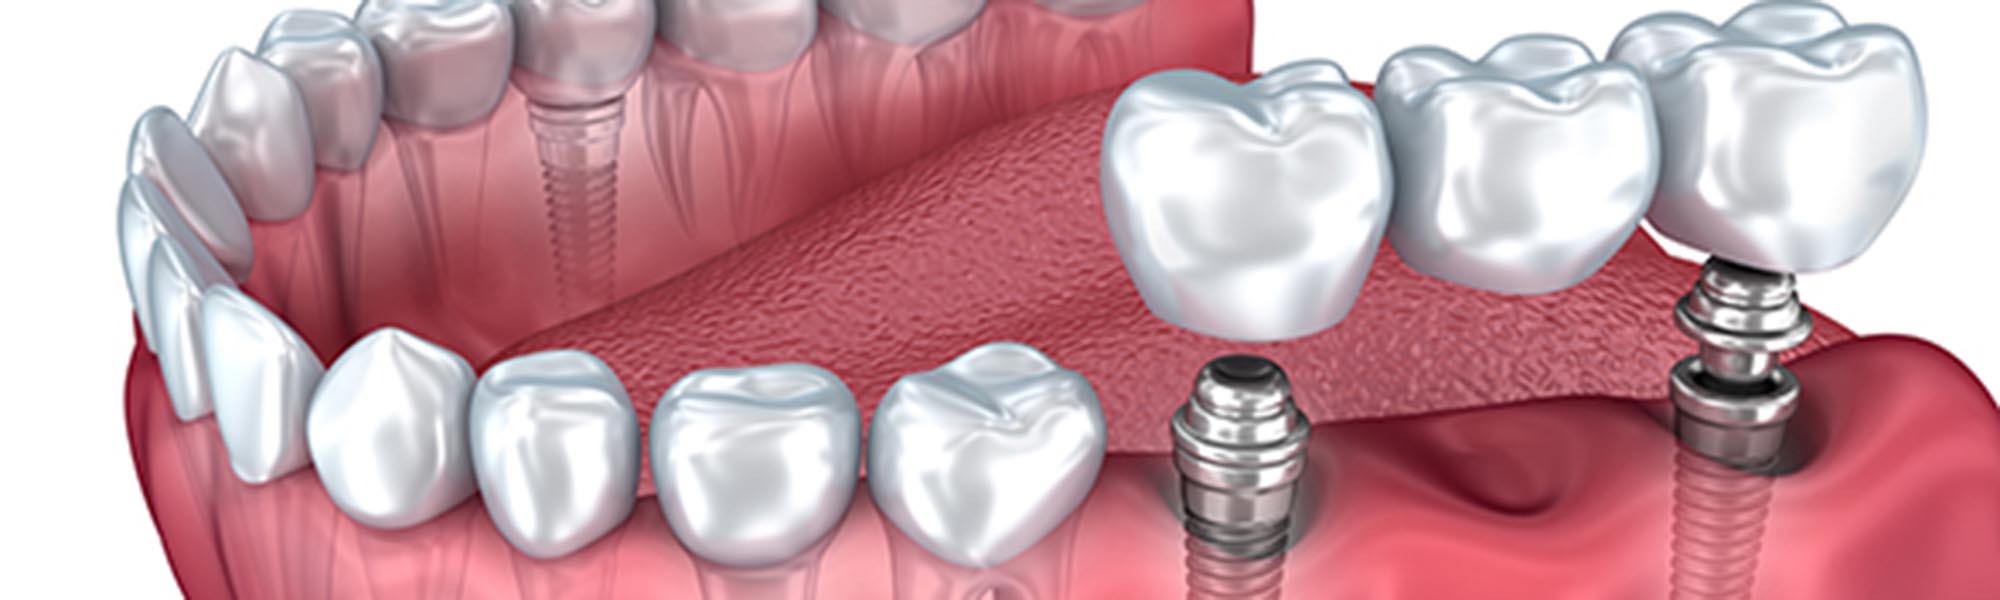 Multiple Teeth Implants Dentistry El Segundo CA